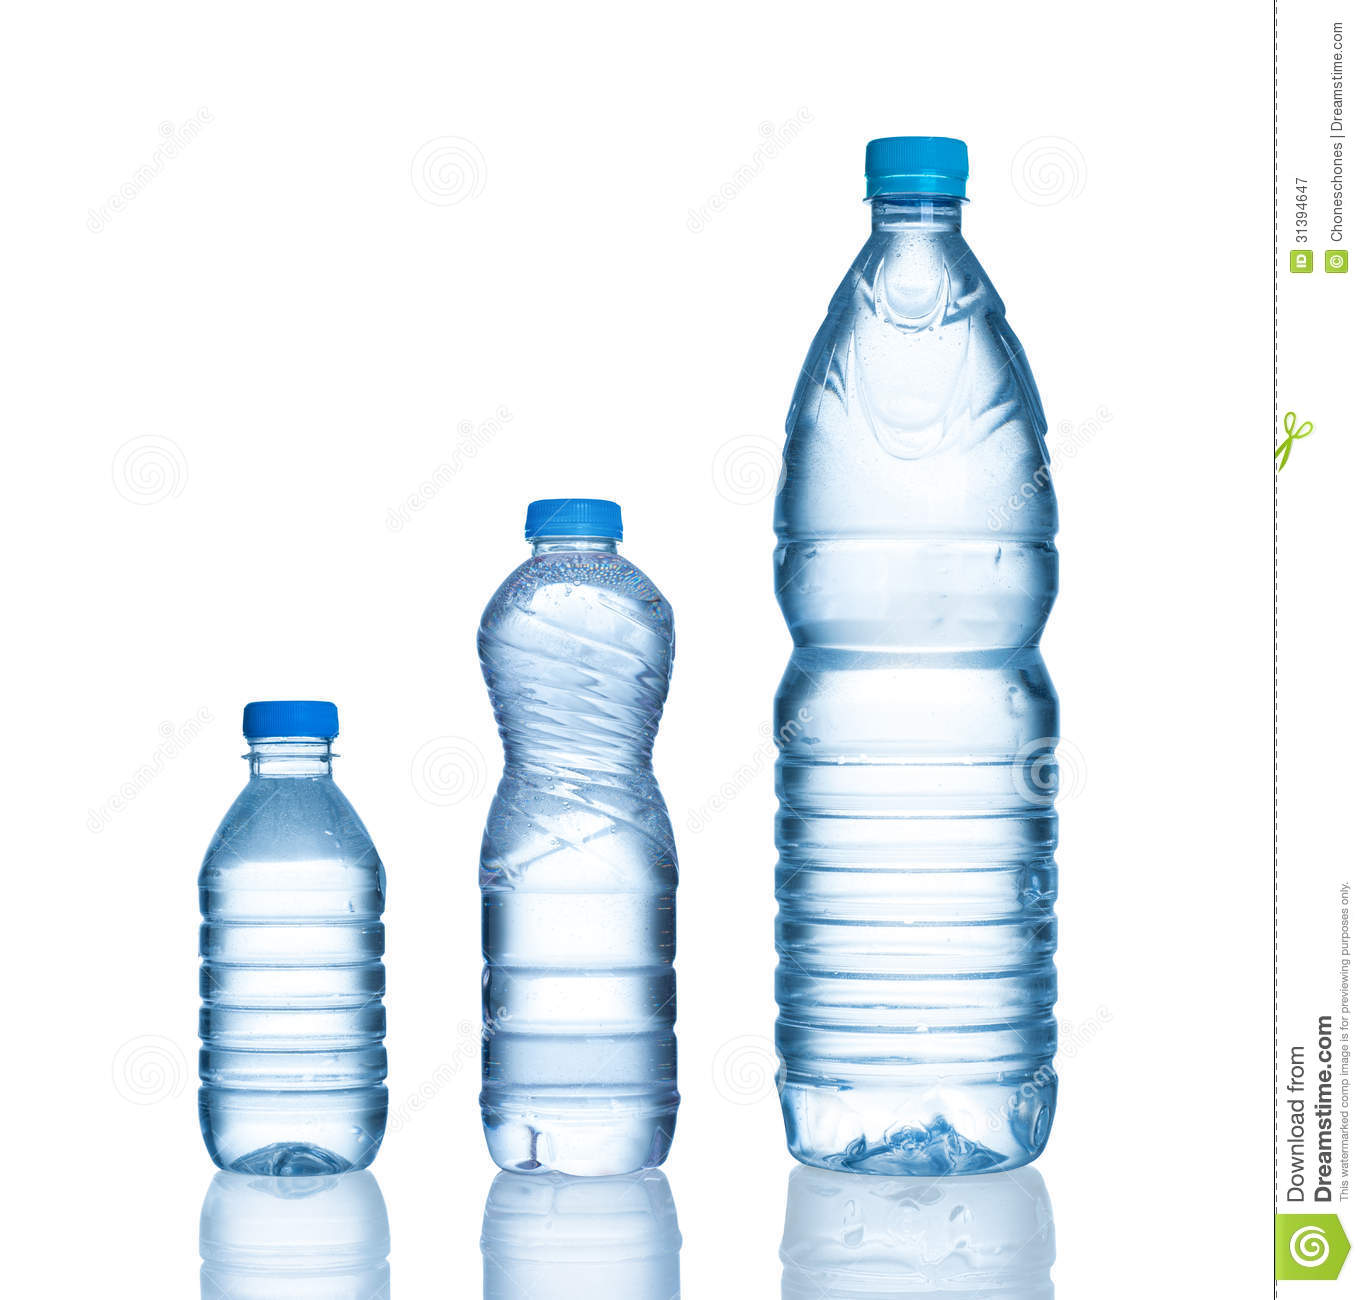 7 Health Benefits of Drinking Enough Water - NRG Xpress